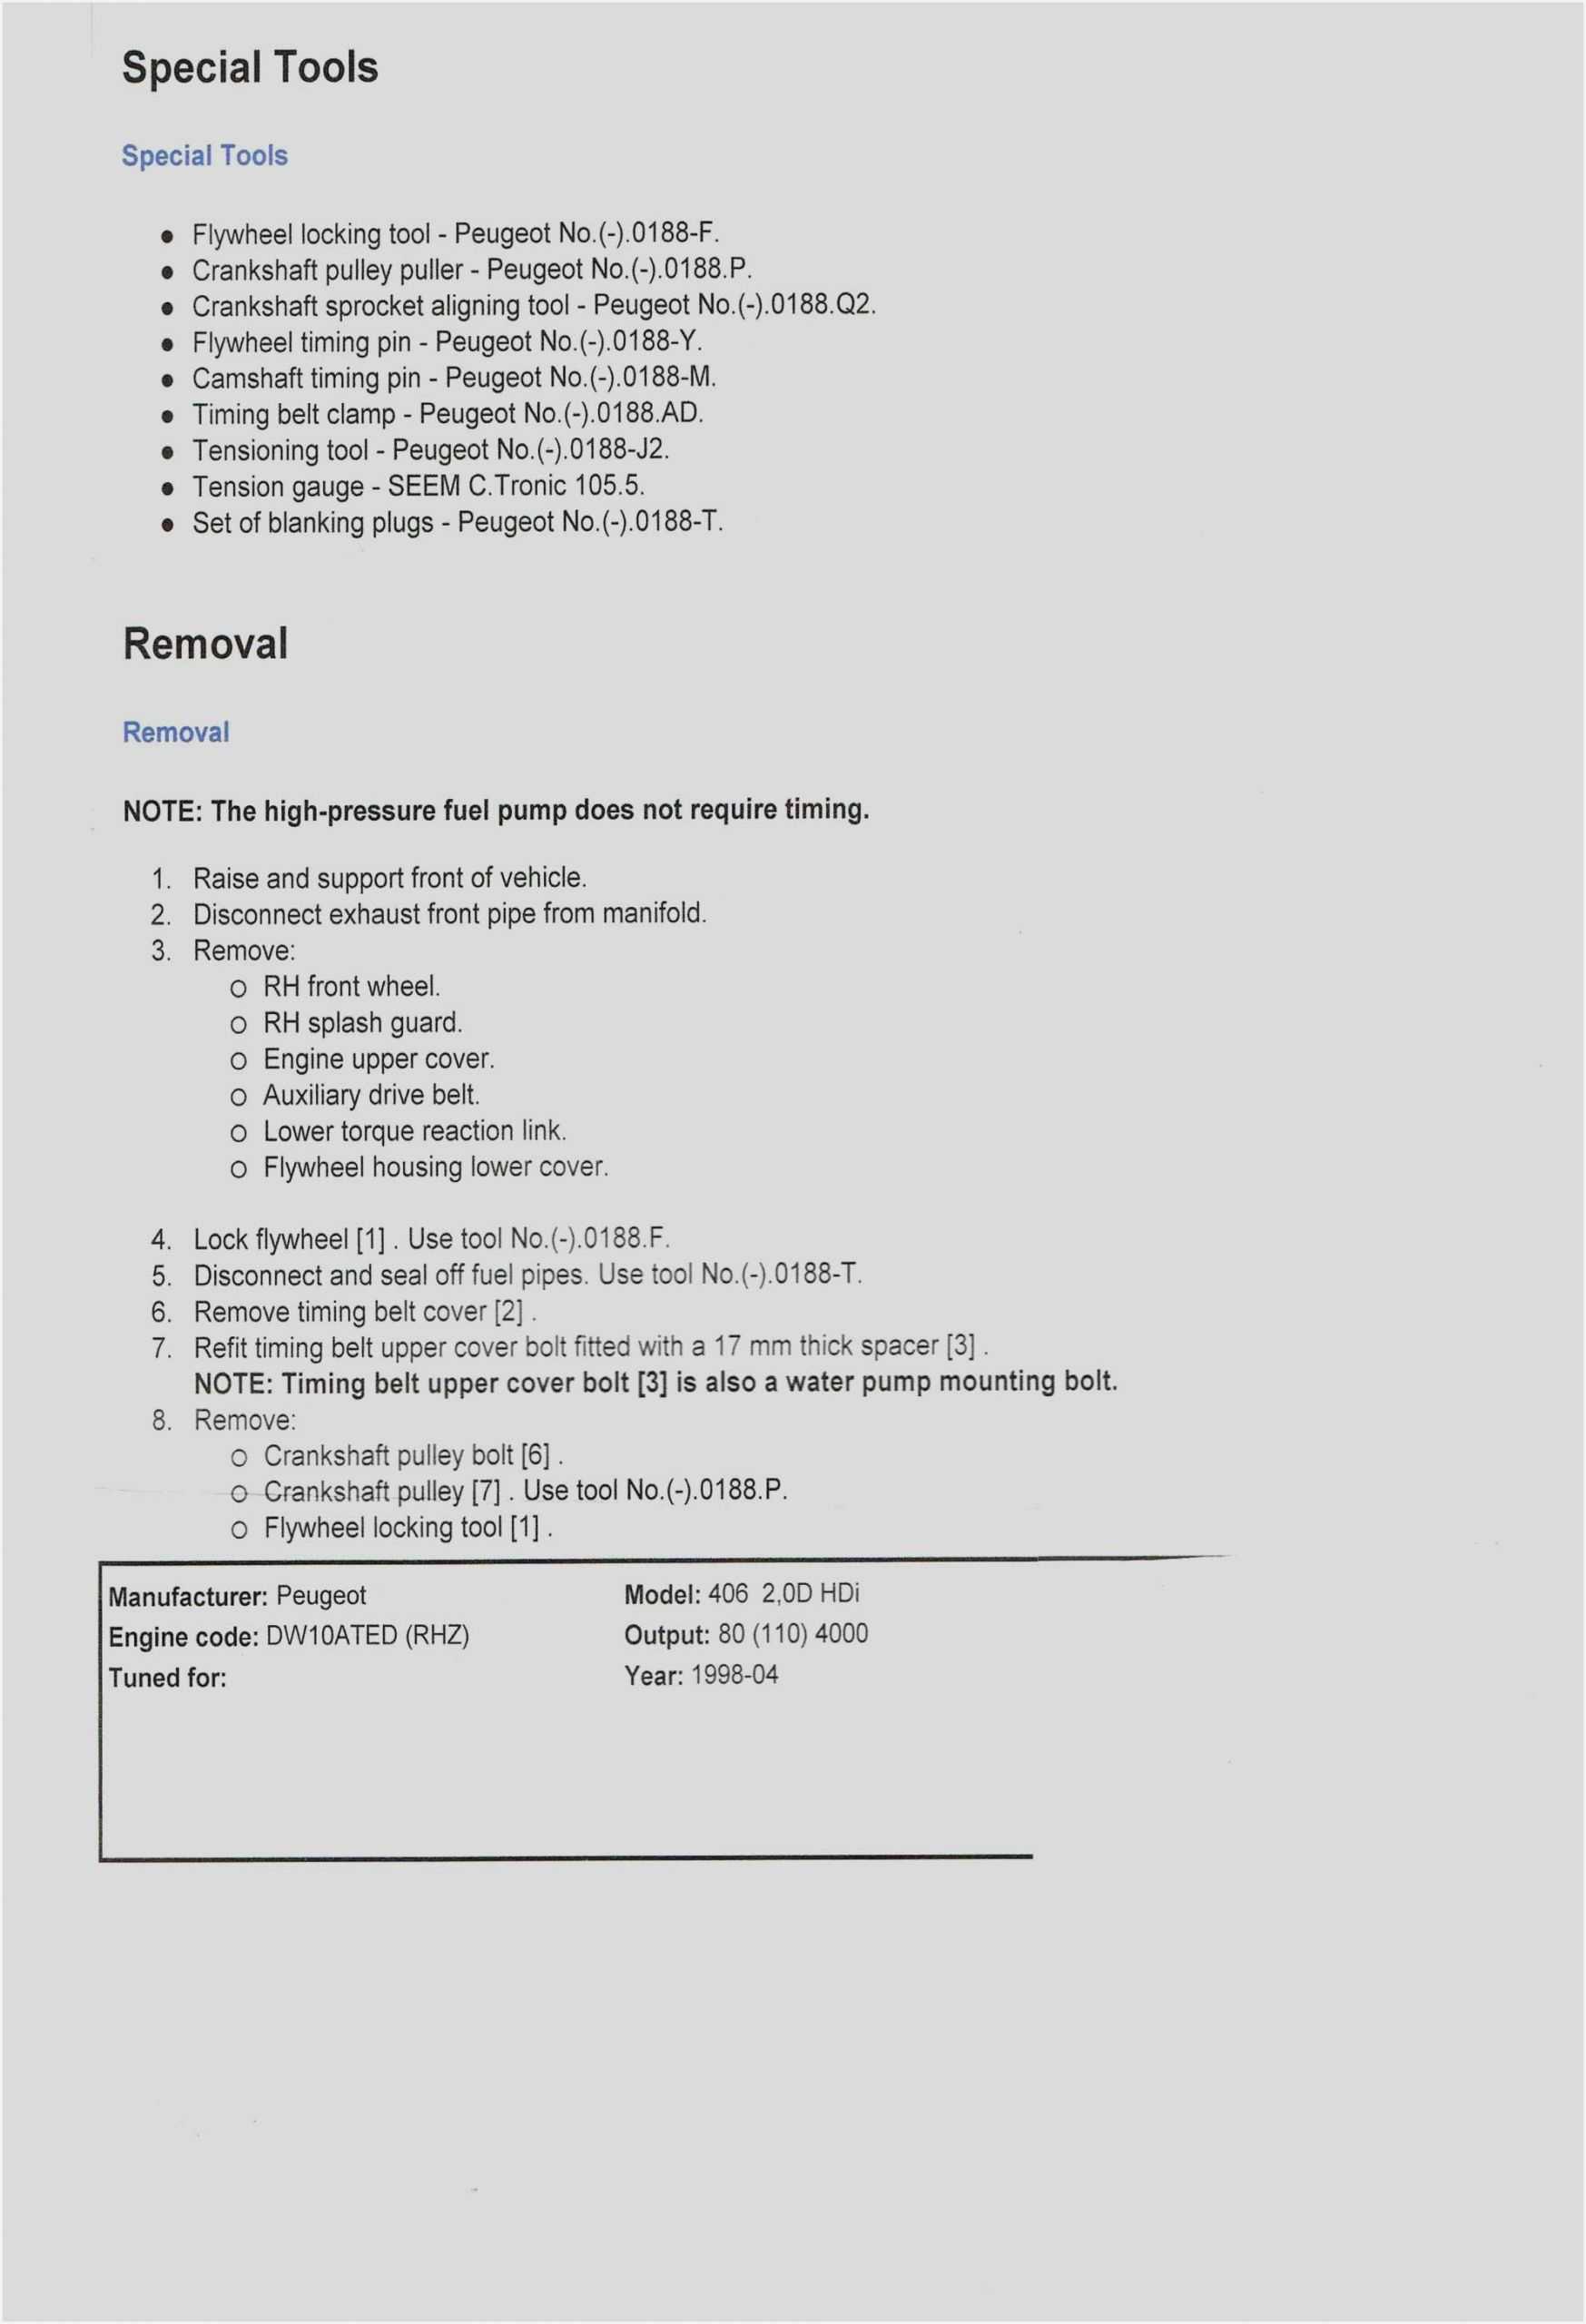 Download Free Blank Resume Templates – Resume : Resume Throughout Free Blank Cv Template Download